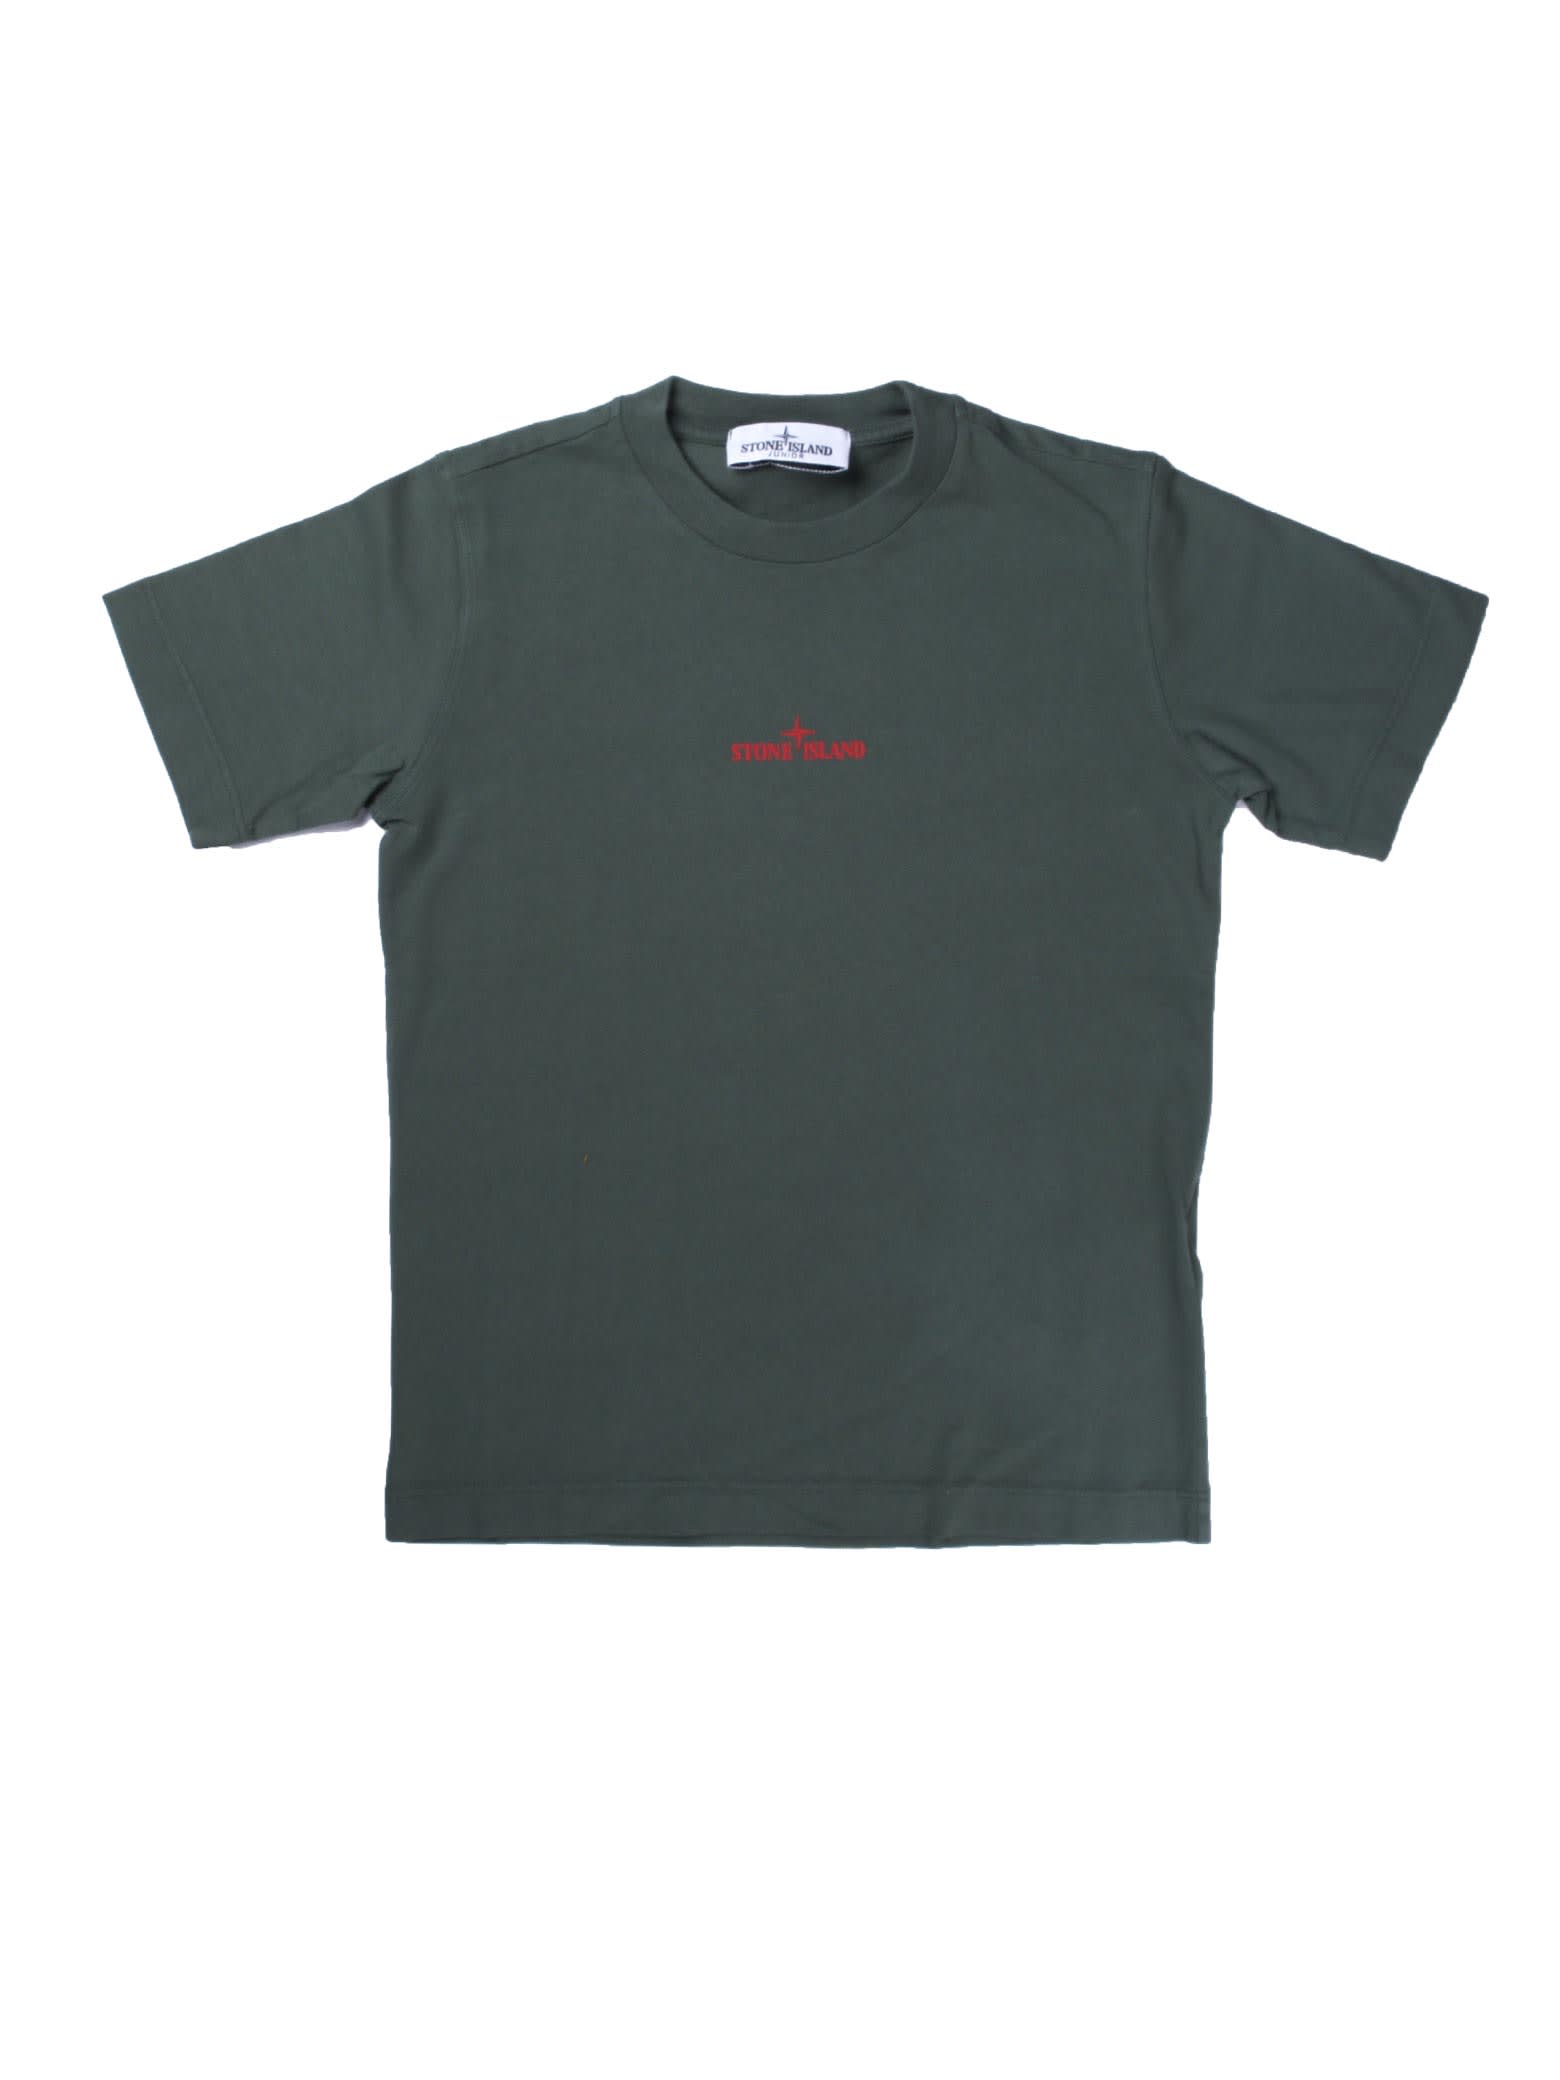 Stone Island Military Green Short Sleeve T-shirt